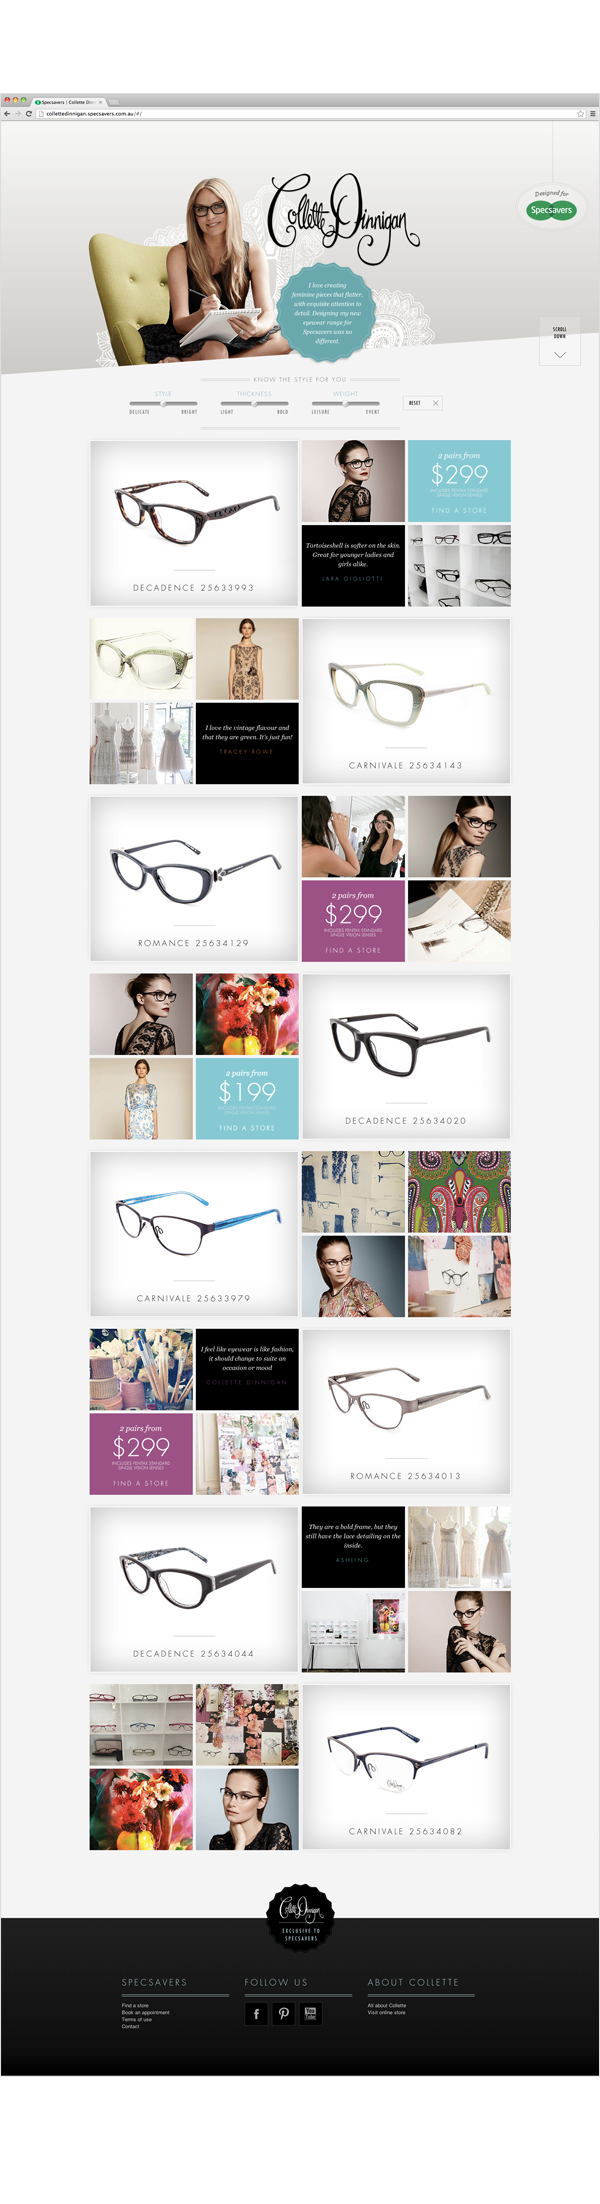 Responsive Lookbook collette dinnigan Specsavers glasses filter